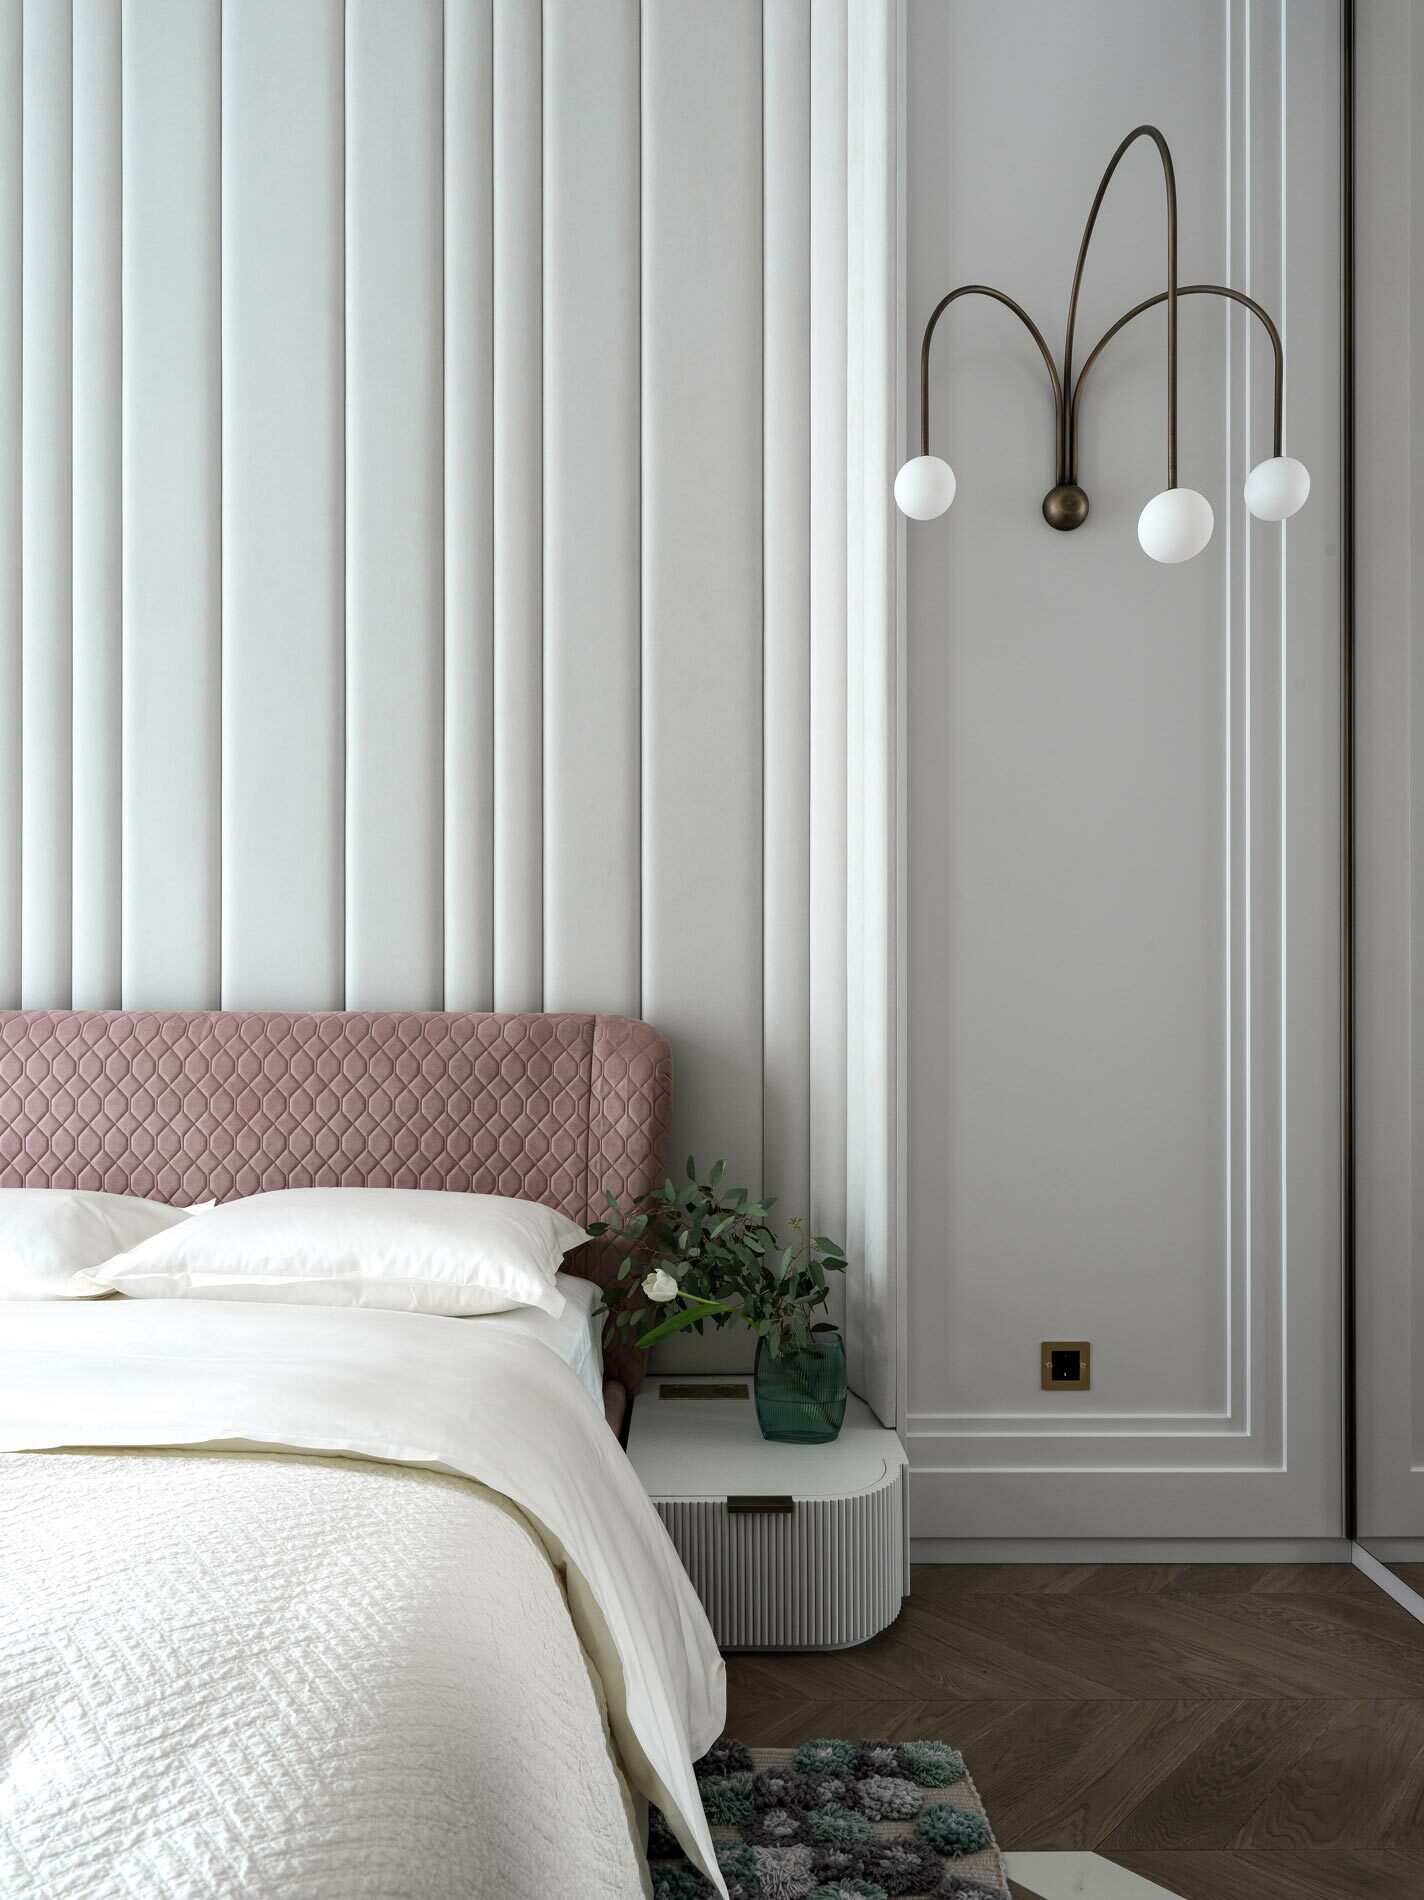 Ordynka 25 bedroom interior design by Nino Zvarkovskaya